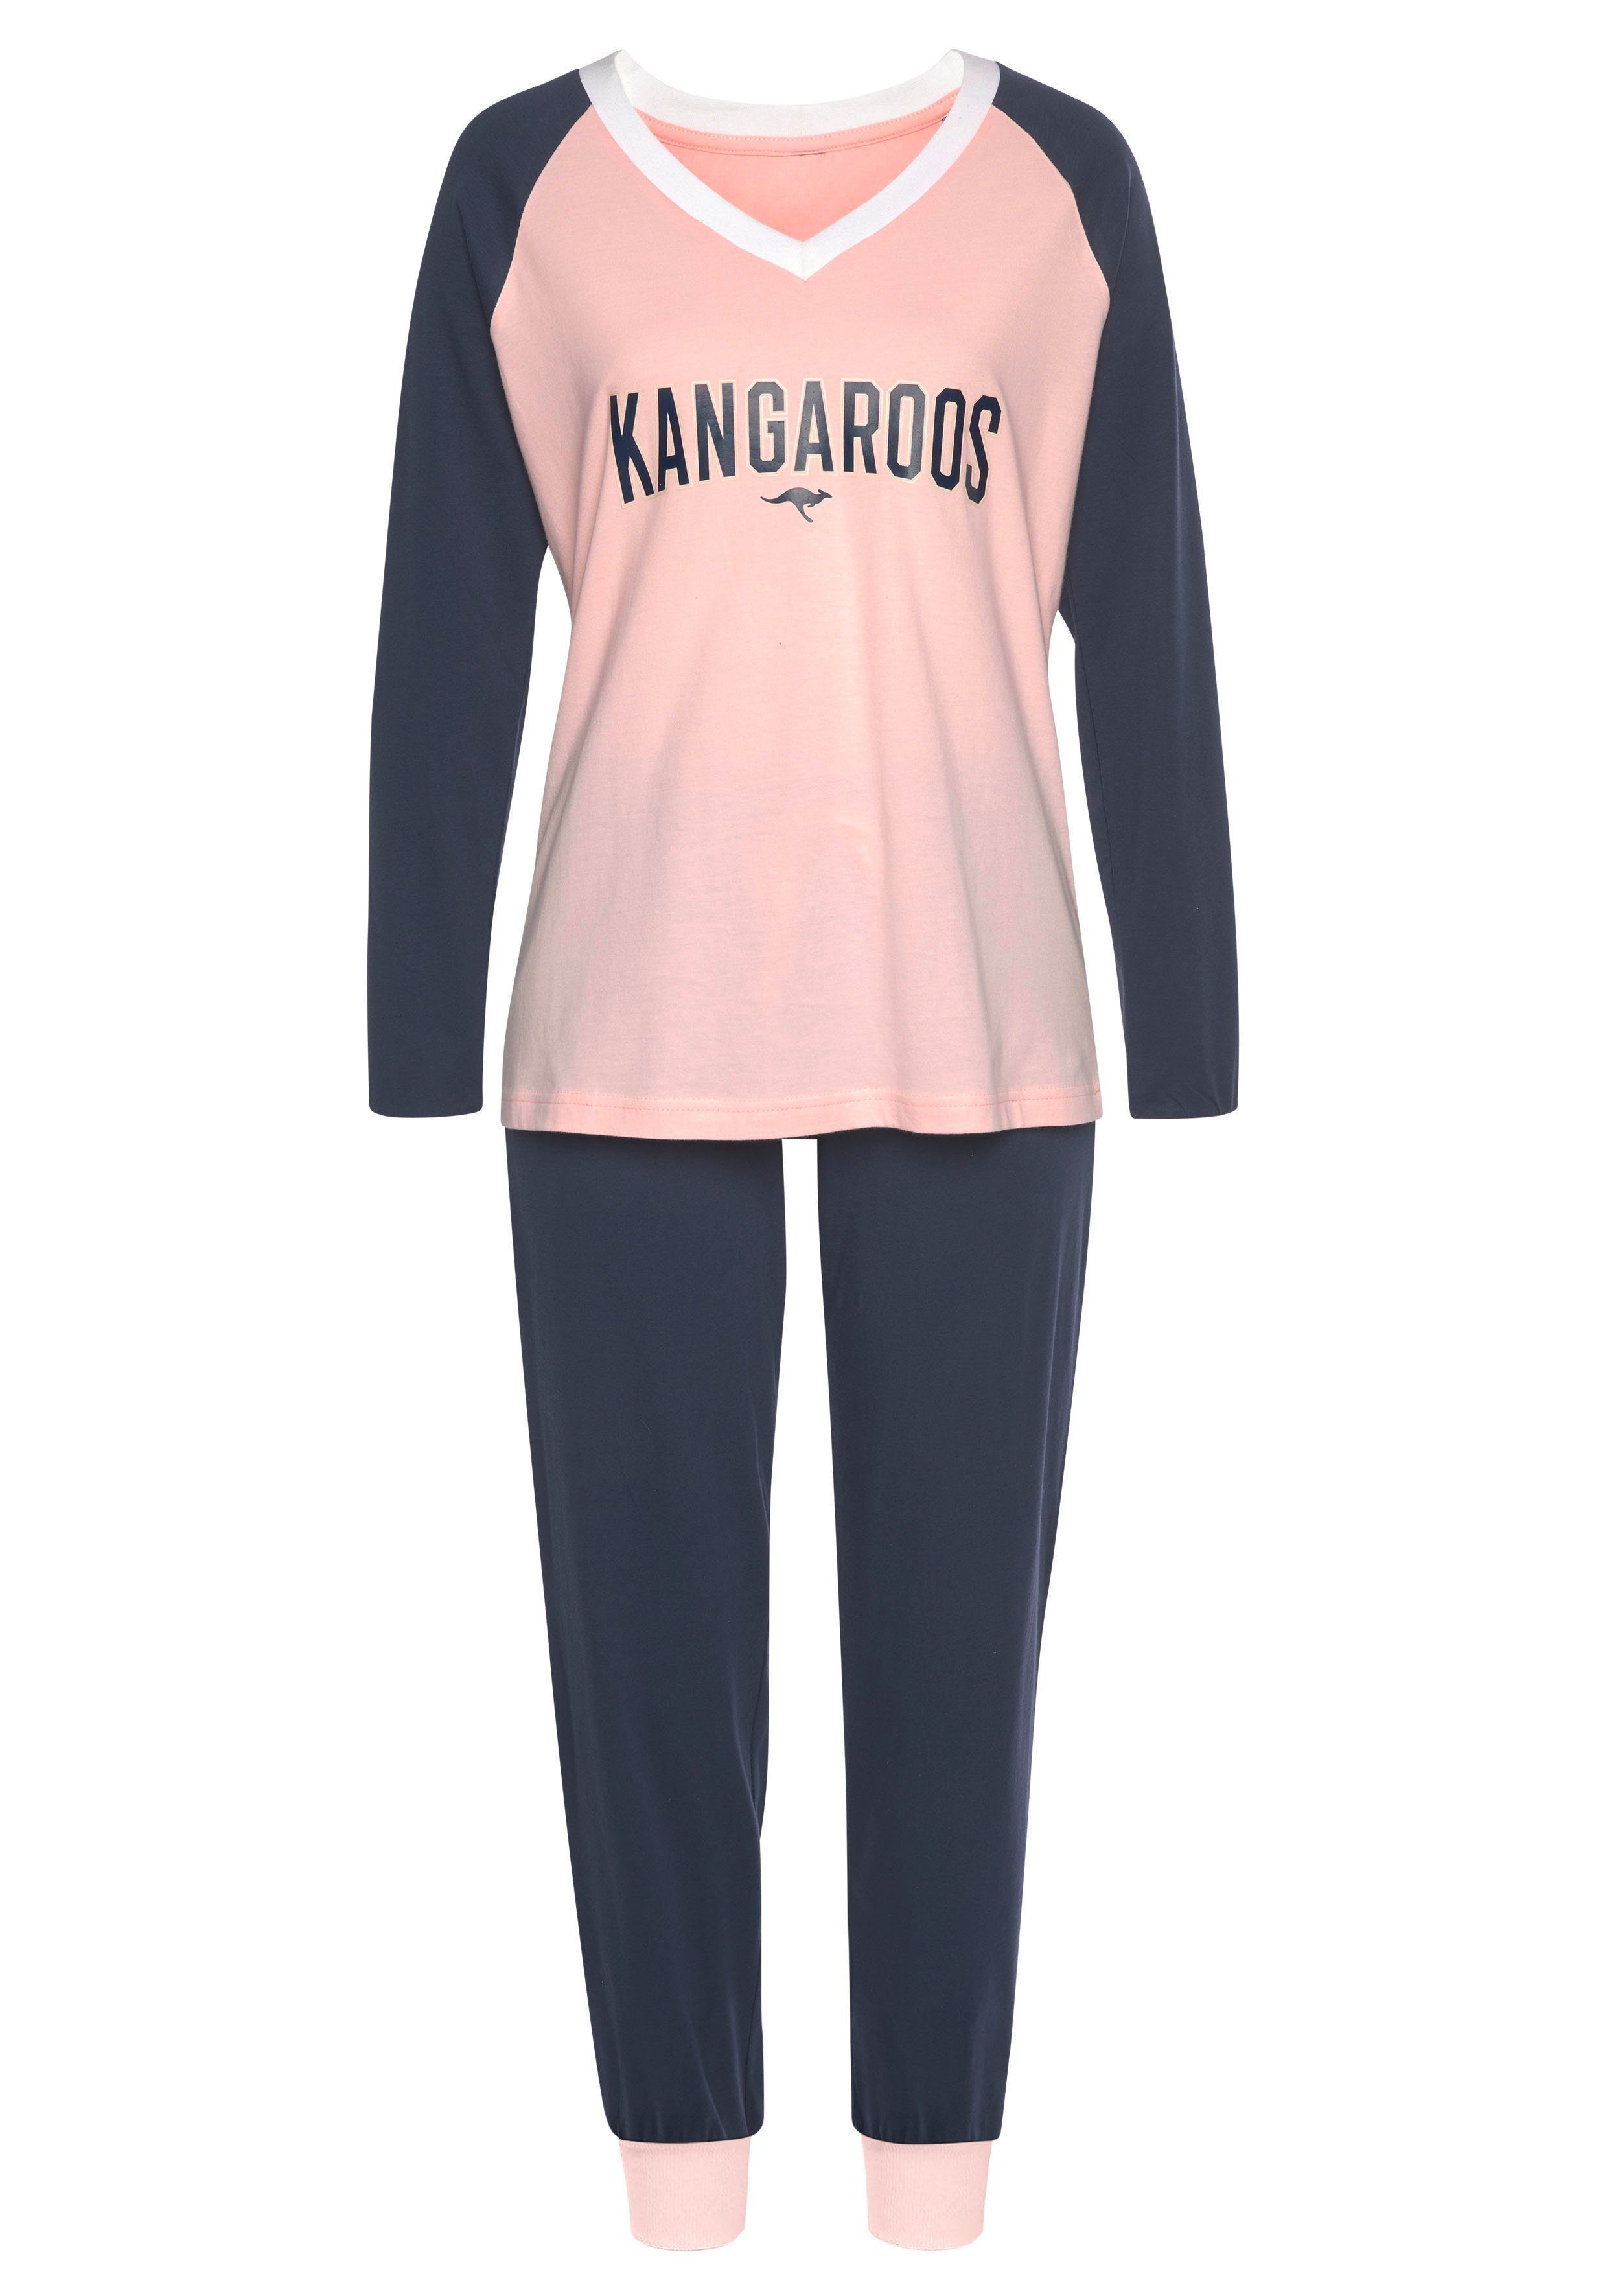 KangaROOS mit Stück) Raglanärmeln rosa-dunkelblau tlg., 1 Pyjama (2 kontrastfarbenen